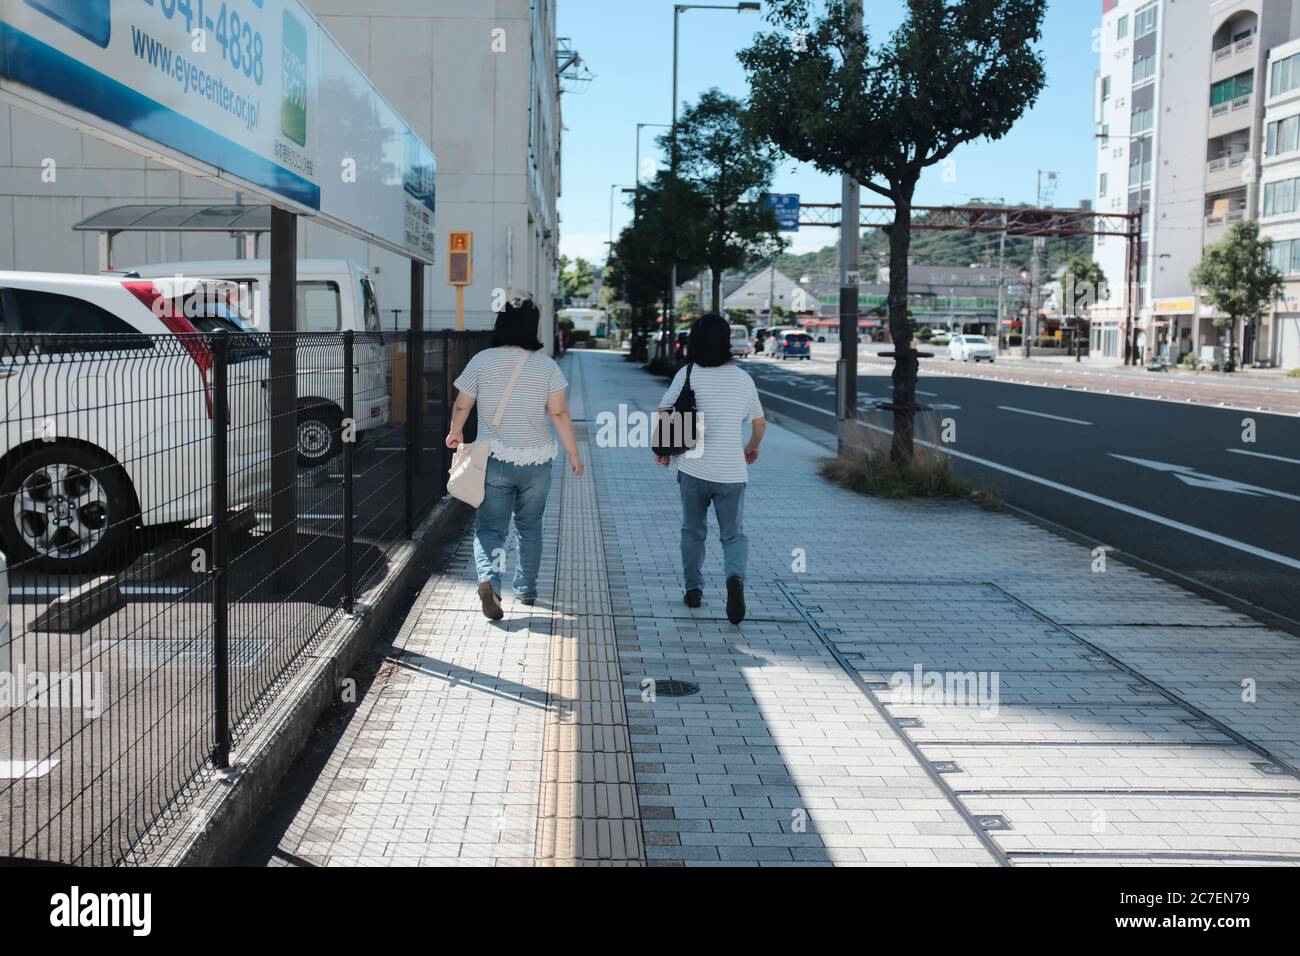 MATSUYAMA, JAPAN - Sep 23, 2019: A horizontal shot of two friends wearing matching outfits walking on the sidewalk Stock Photo